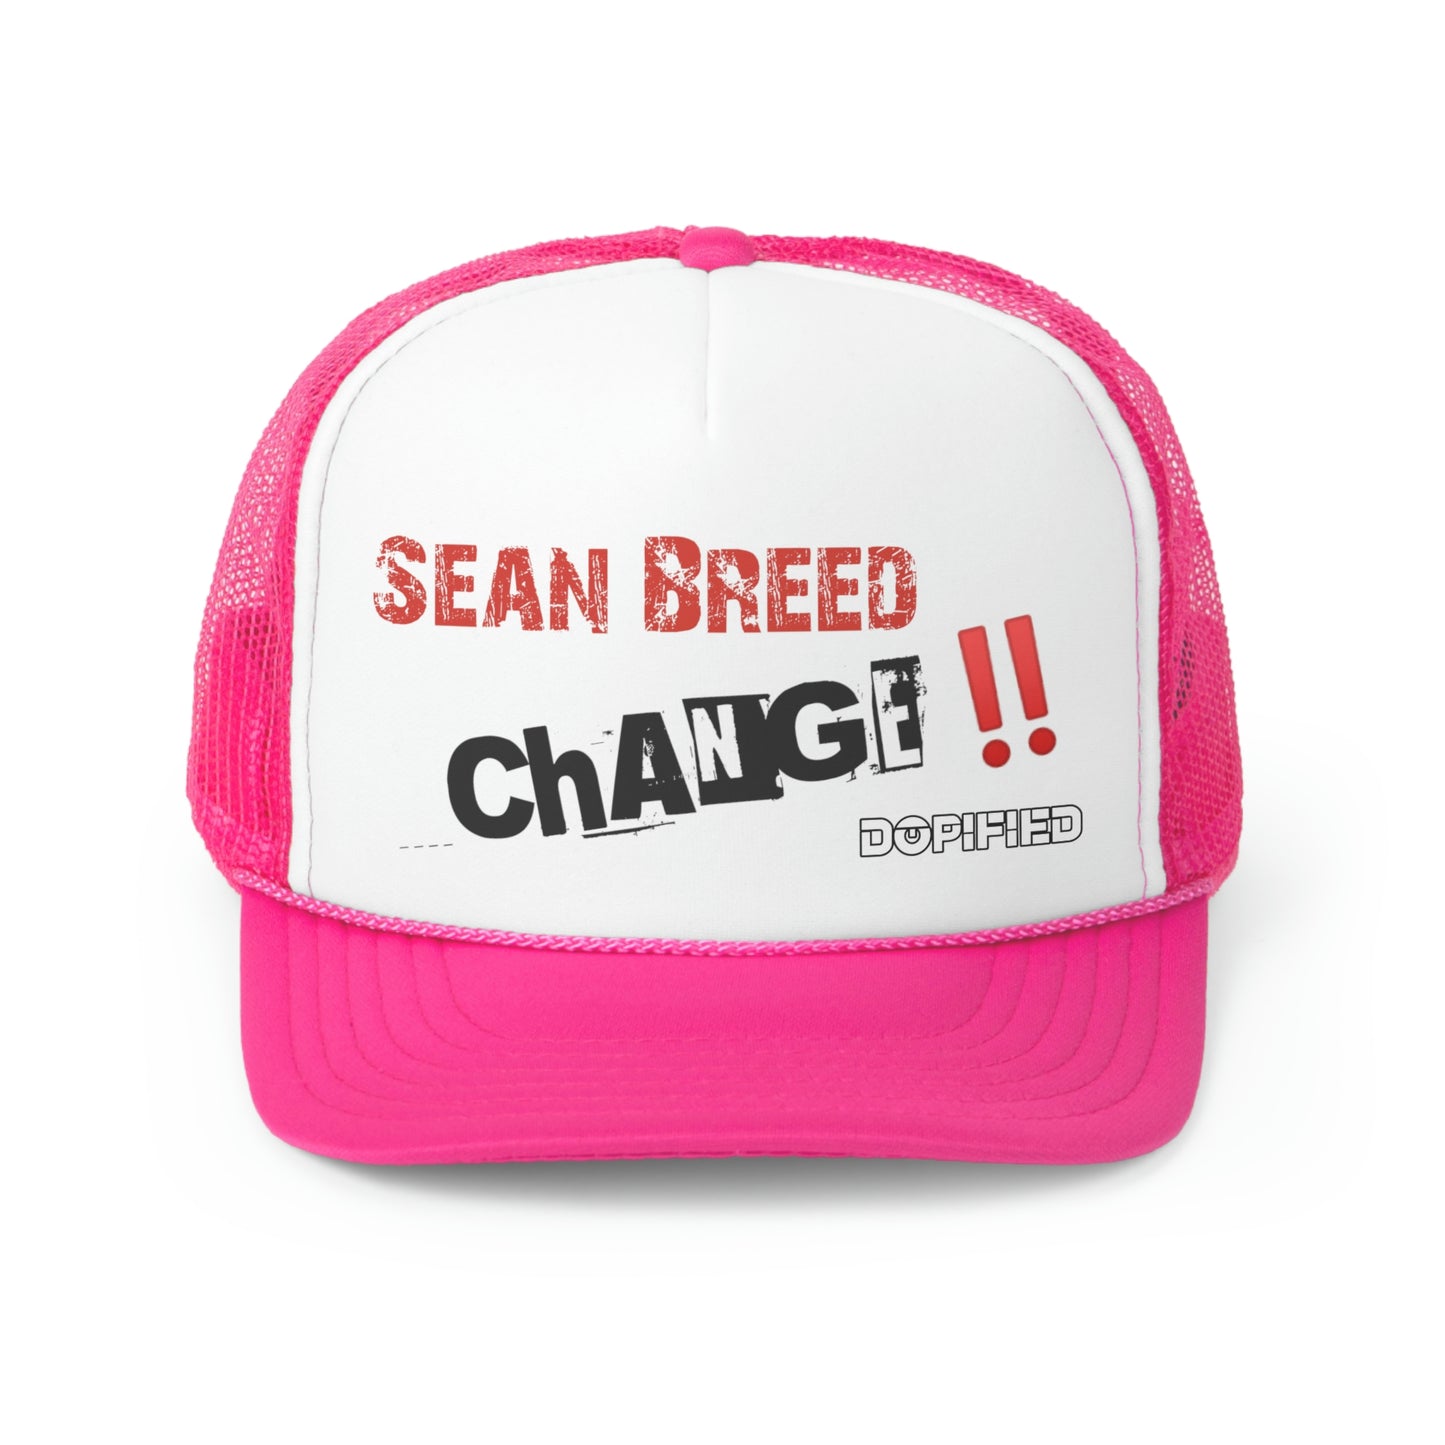 Sean Breed CHANGE ‼️ expressional Trucker